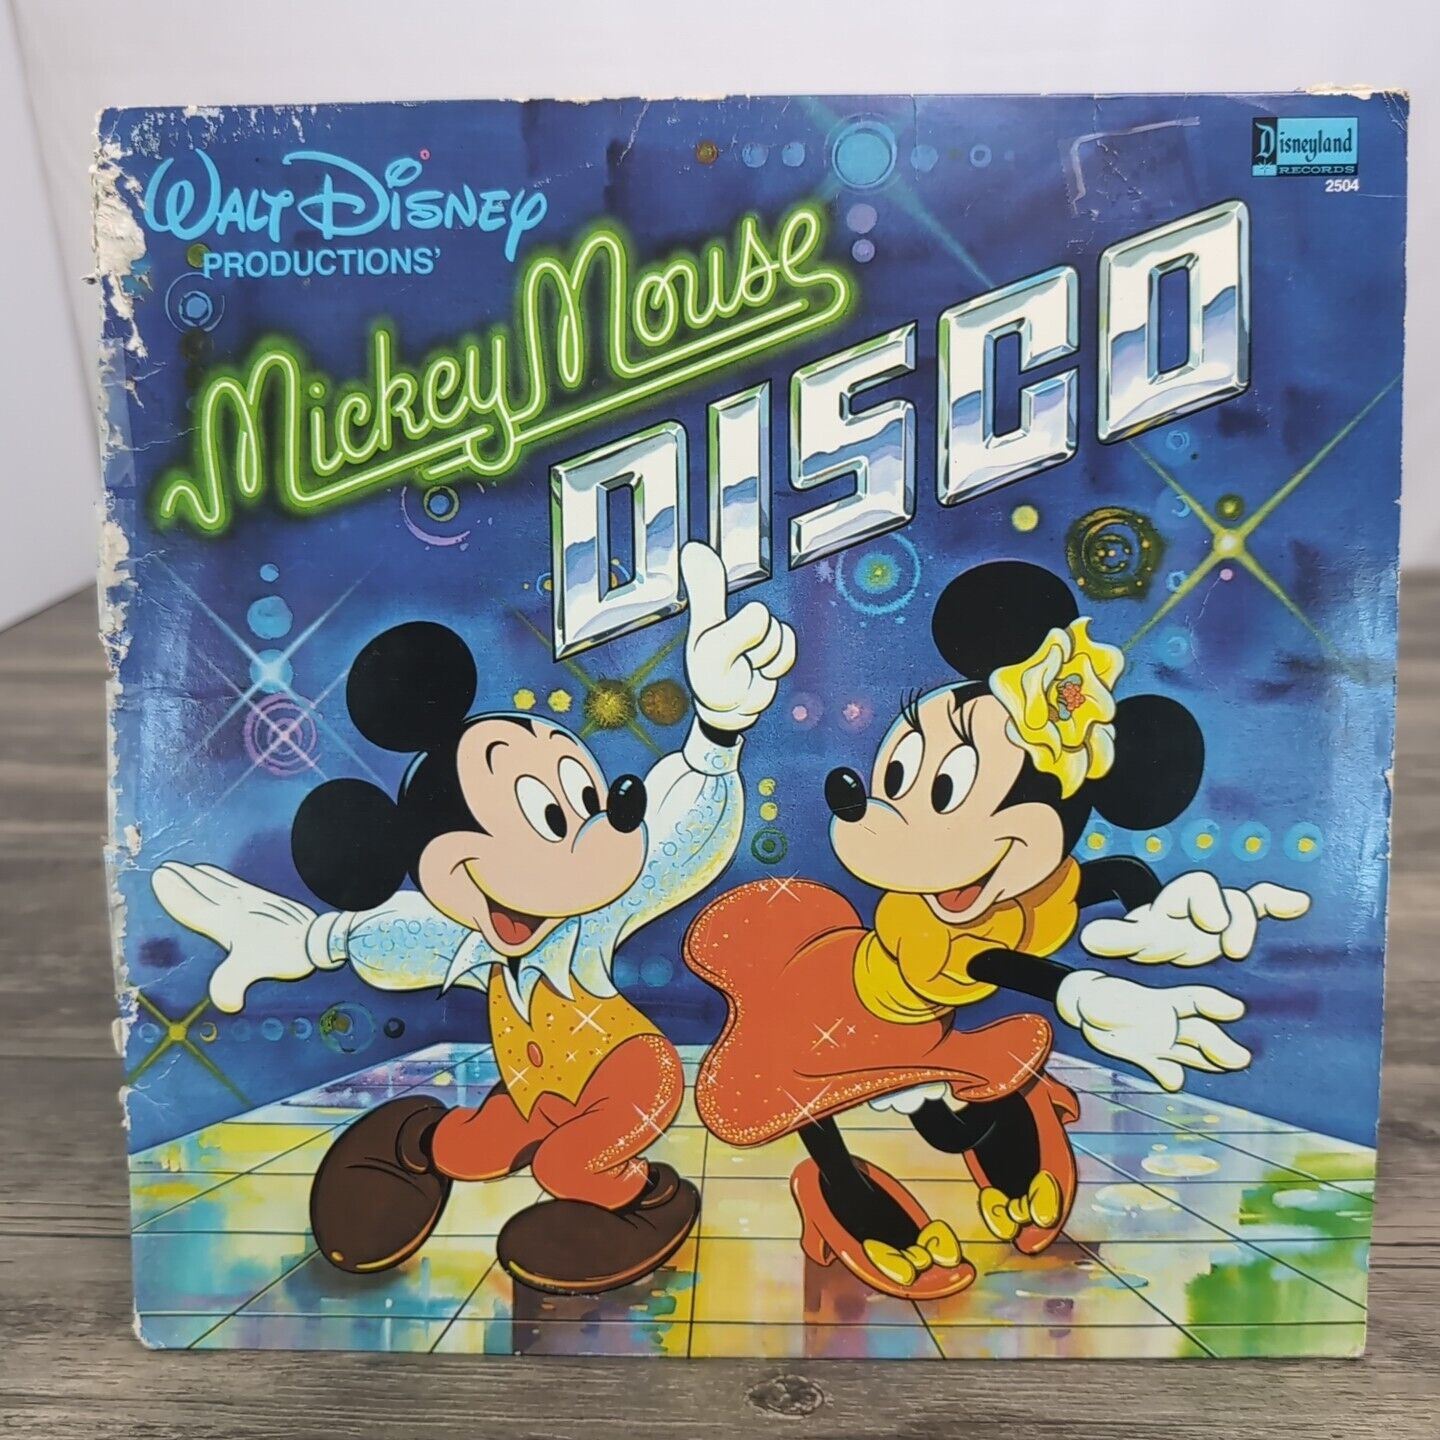 Vintage Mickey Mouse Disco Vinyl, LP 1979 Disneyland 2504 Play Tested